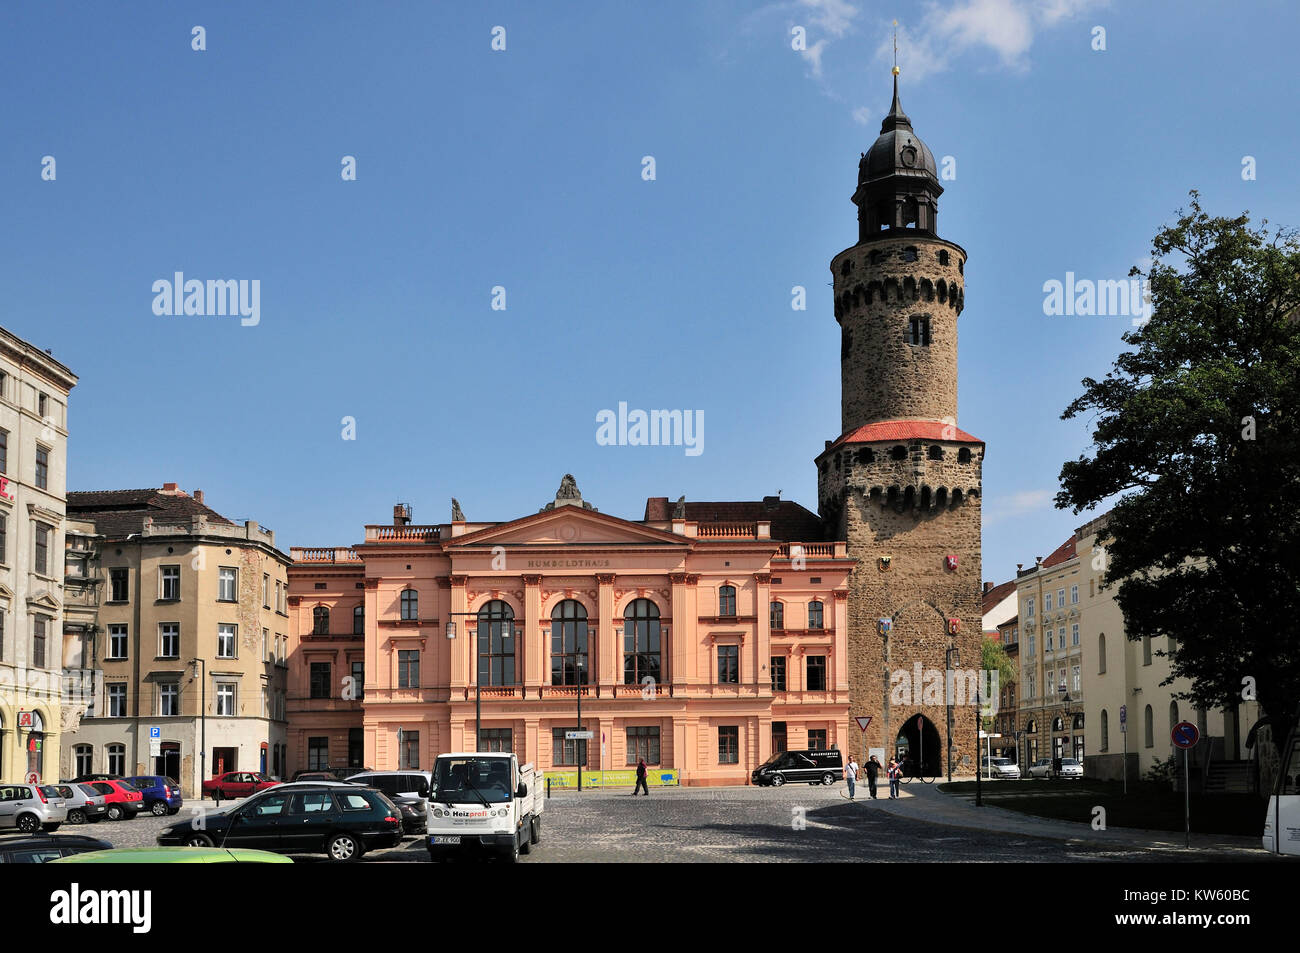 City fortification imperial wild boar tower, Goerlitzer Old Town, Stadtbefestigung Reichenbacher Turm, Goerlitzer Altstadt Stock Photo